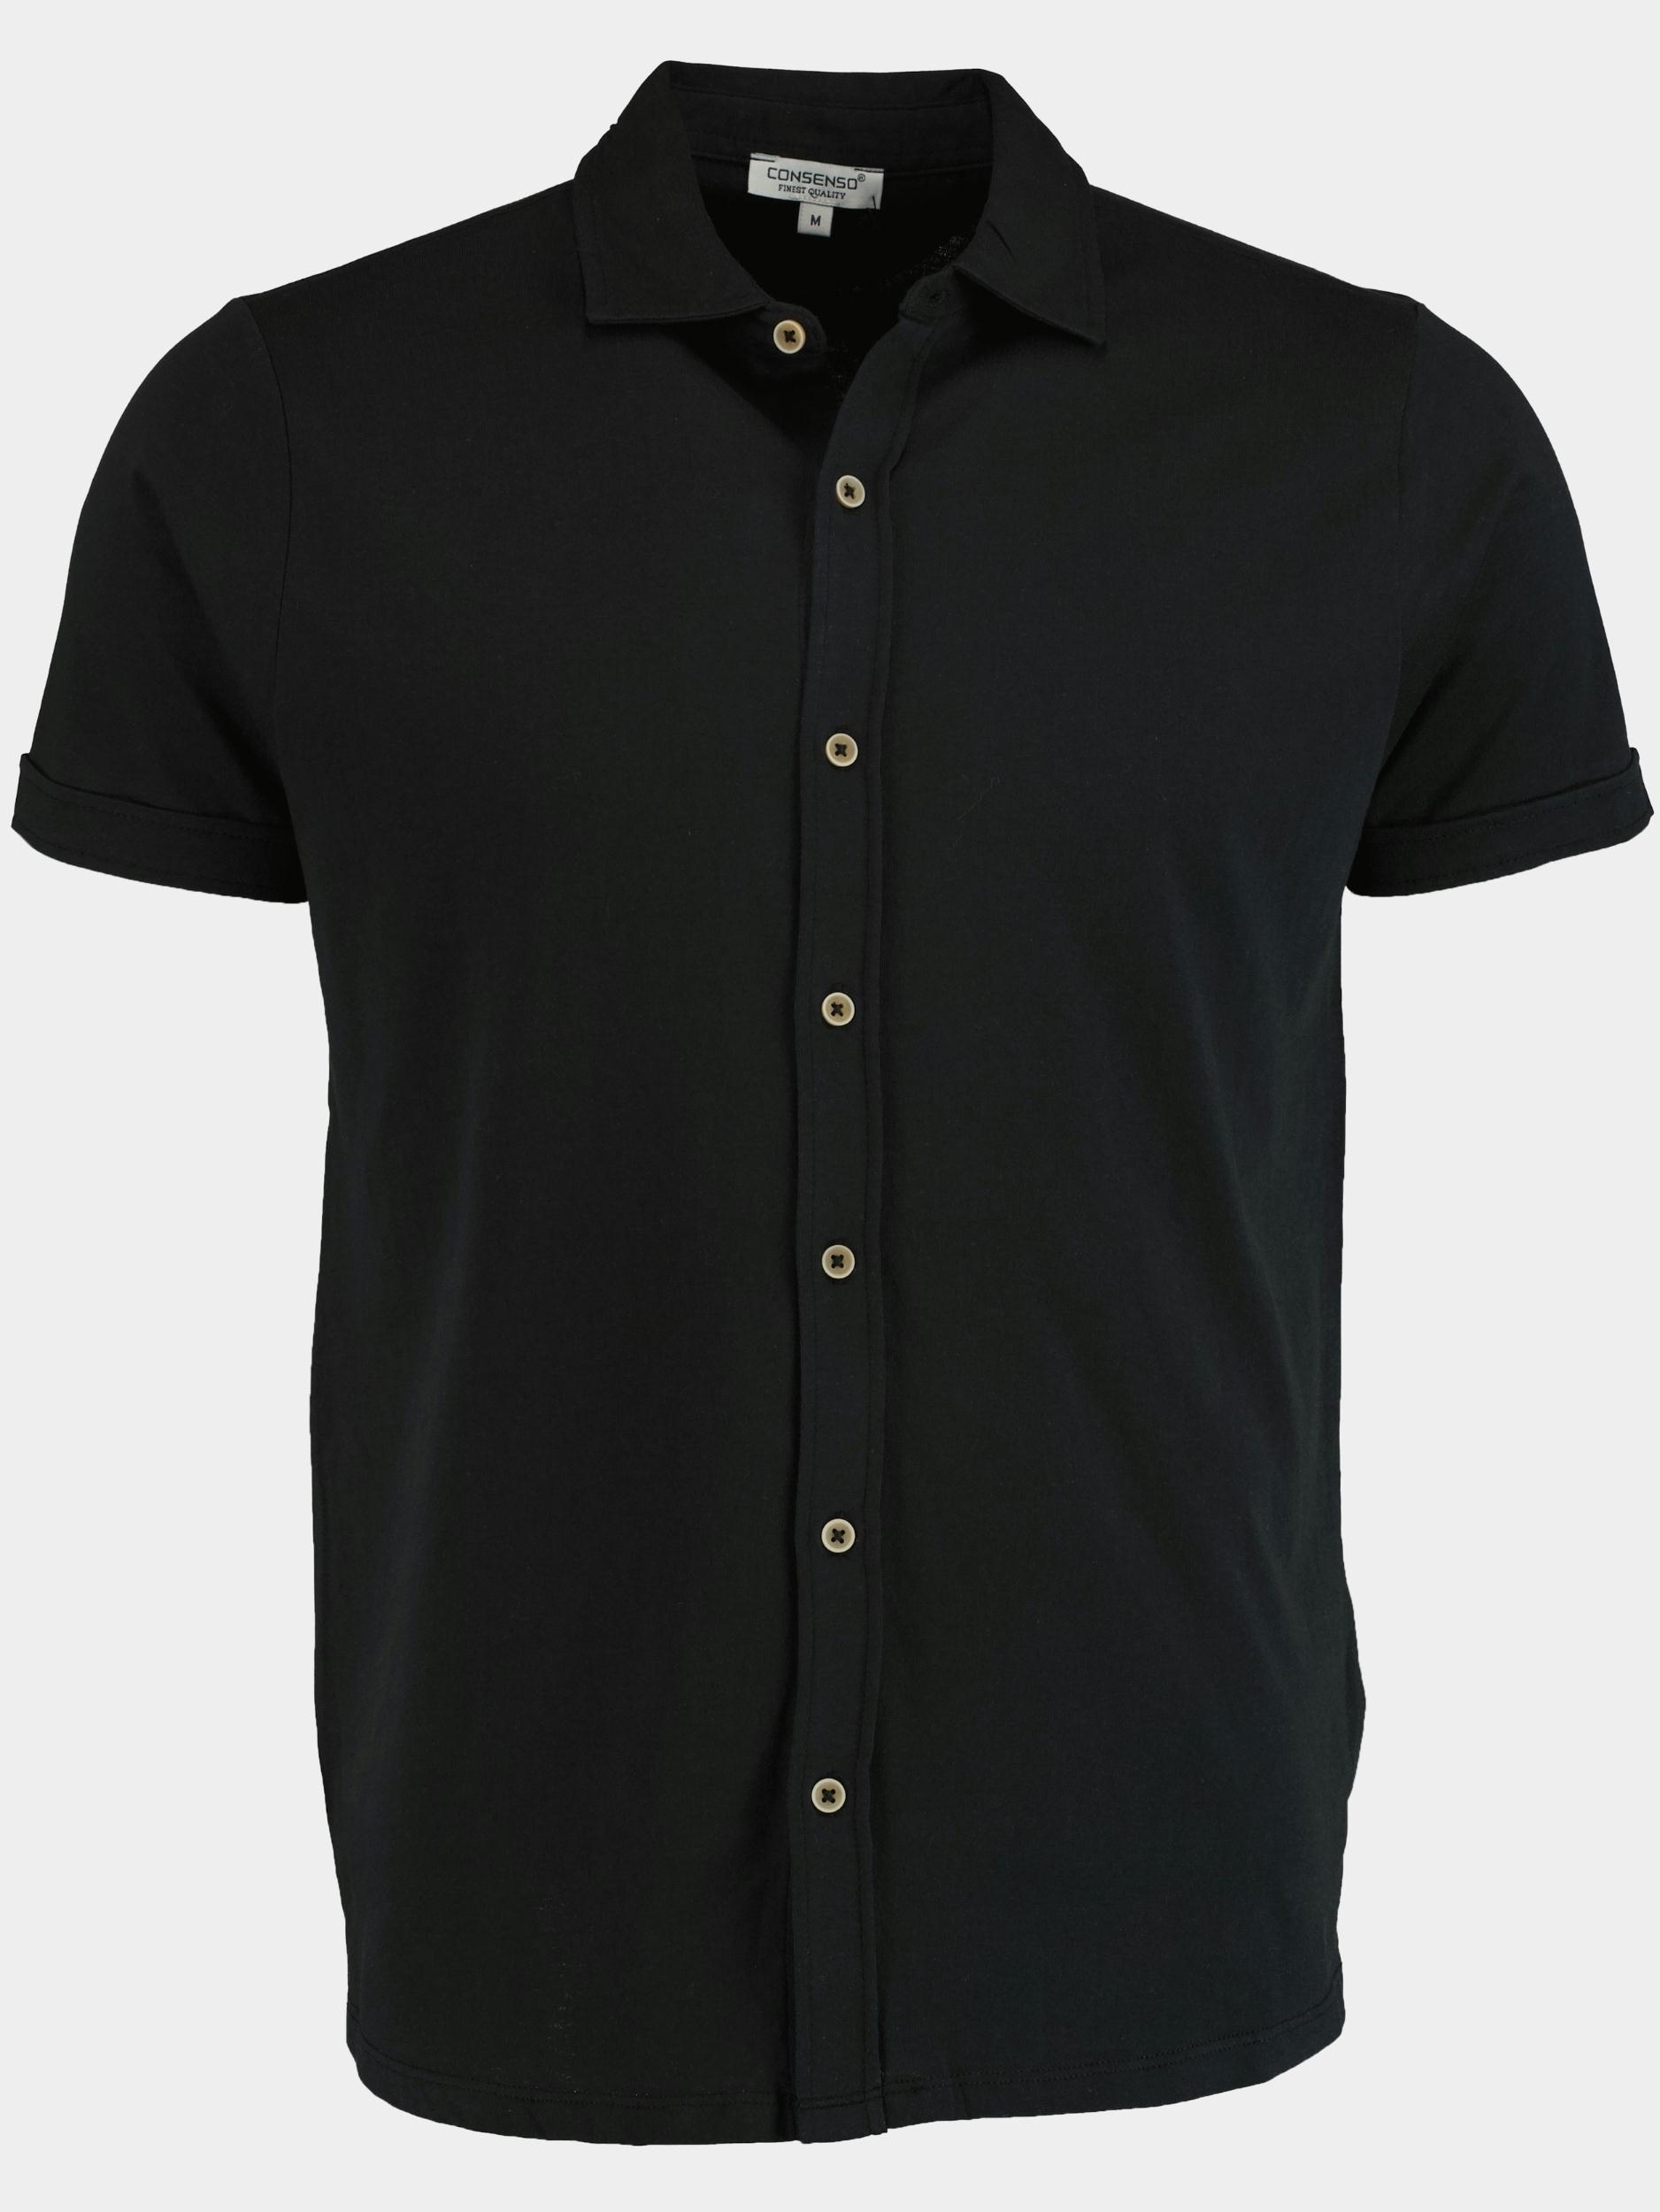 Consenso Casual hemd korte mouw Zwart Doorgeknoopte polo 5902422/900 black